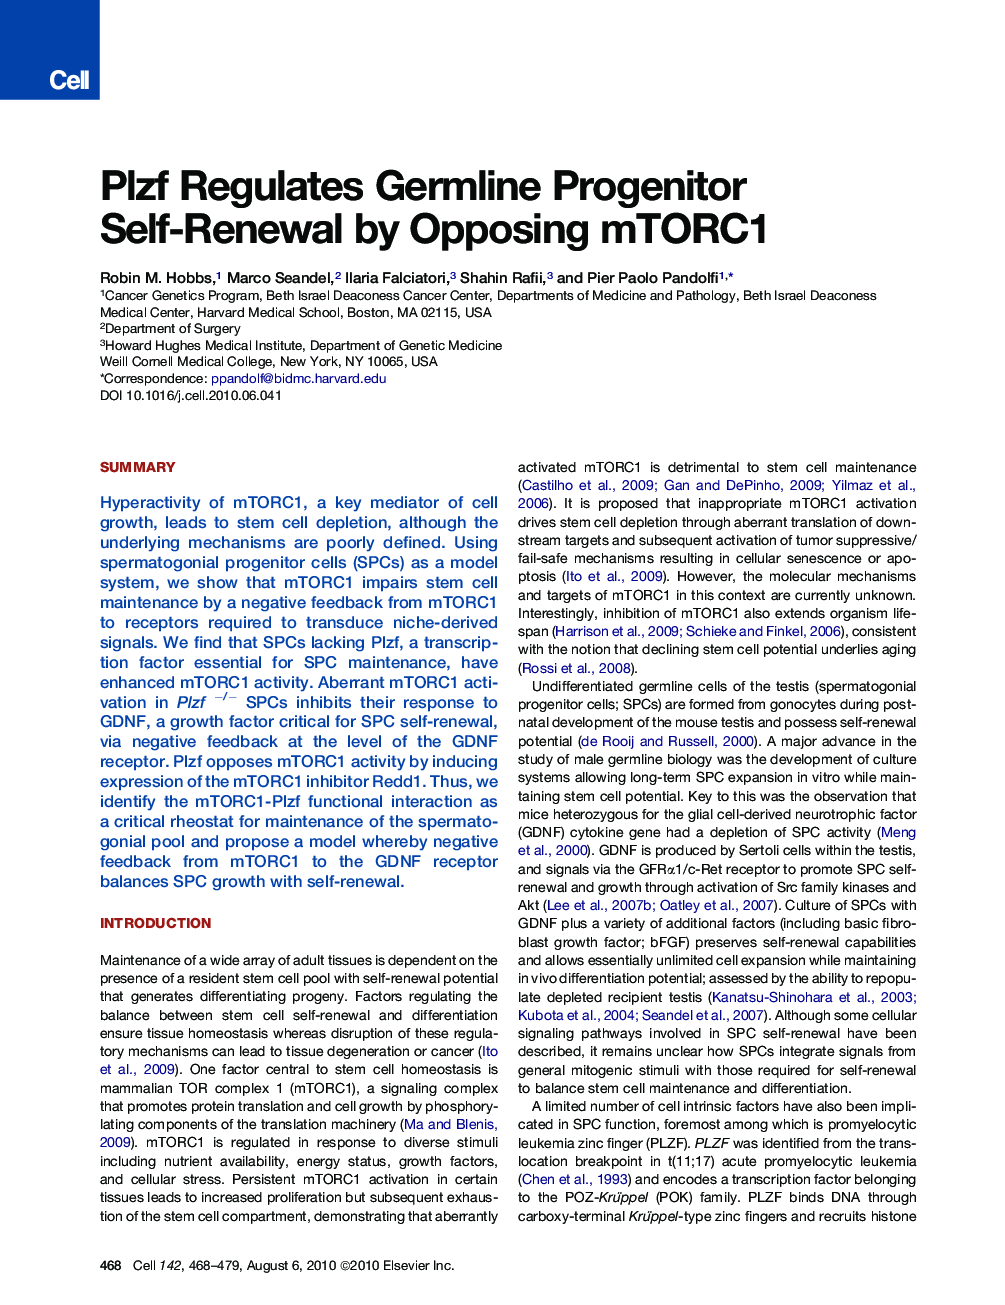 Plzf Regulates Germline Progenitor Self-Renewal by Opposing mTORC1